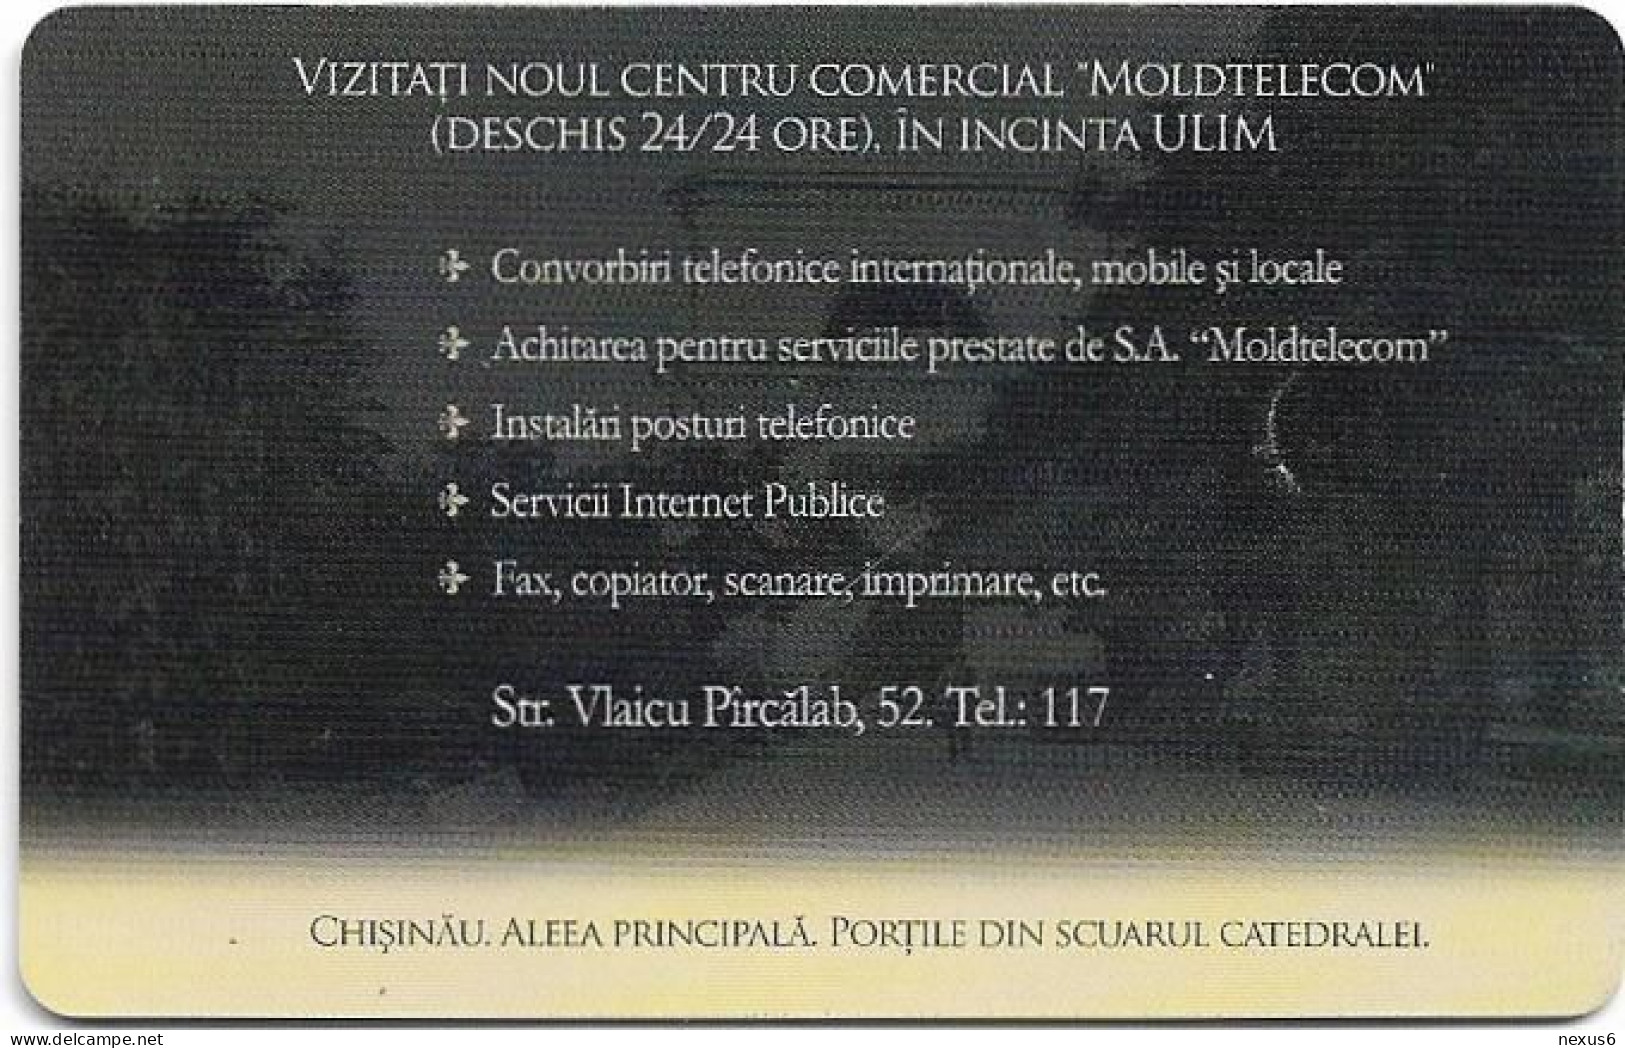 Moldova - Moldtelecom - Chisinau, Aleea Principala, Chip CHT08, 09.2005, 100U, 15.603ex, Used - Moldova